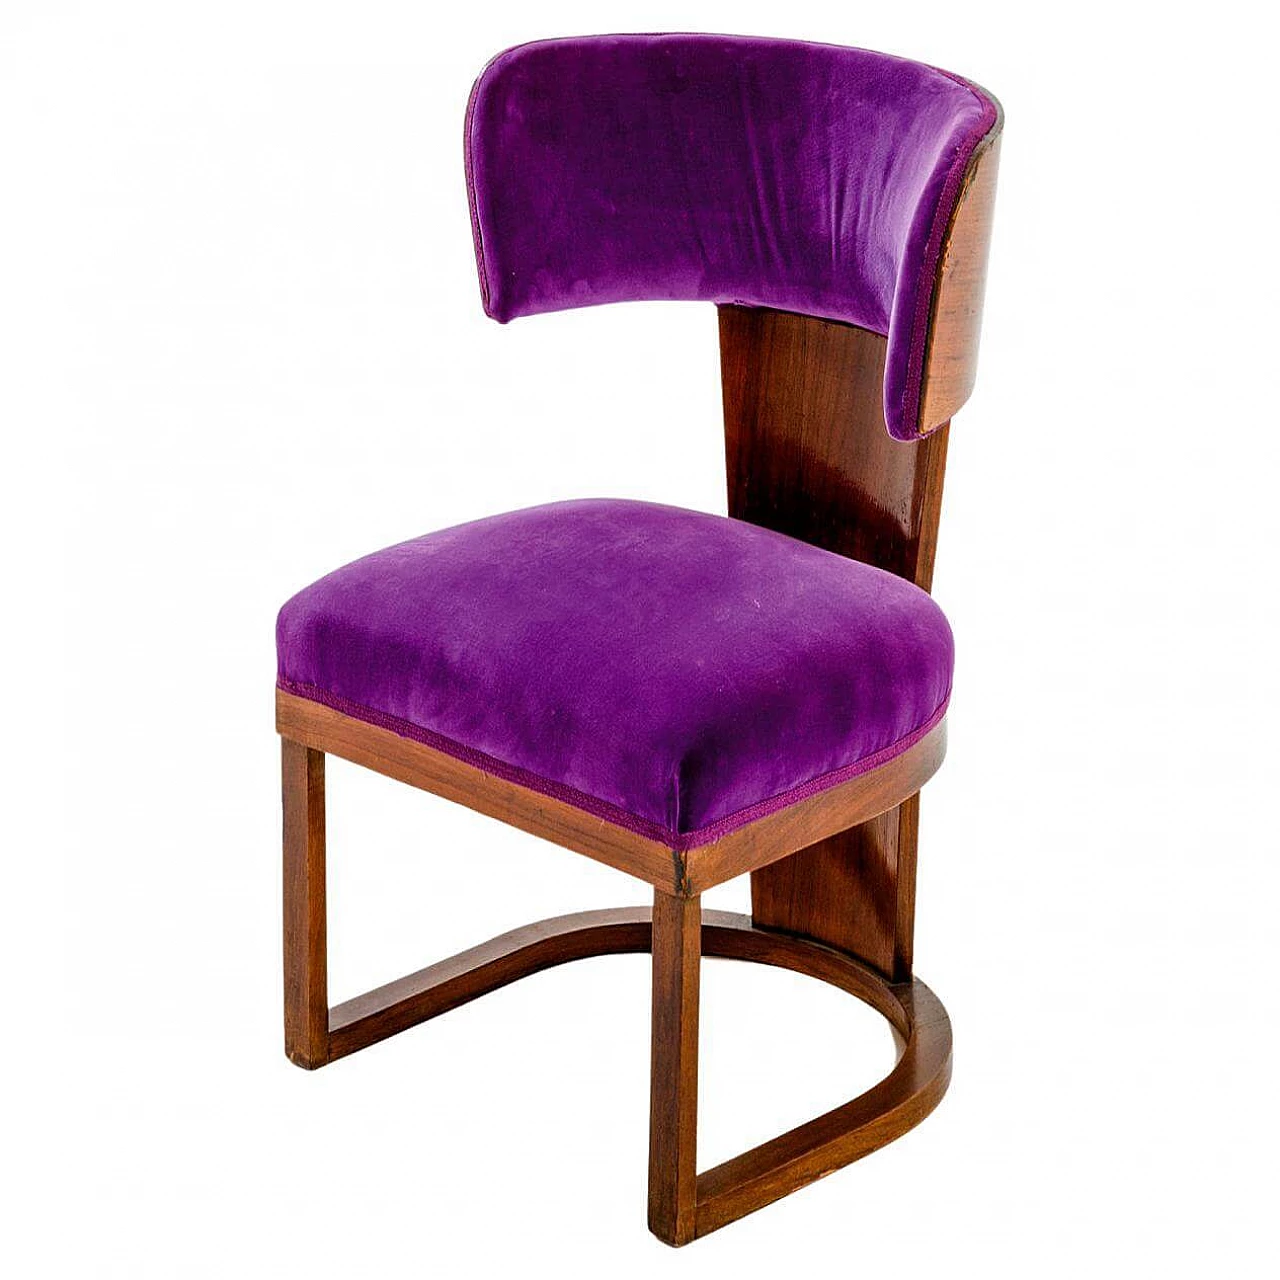 Ernesto Lapadula's armchair in wood and purple velvet, 1930s 1466325